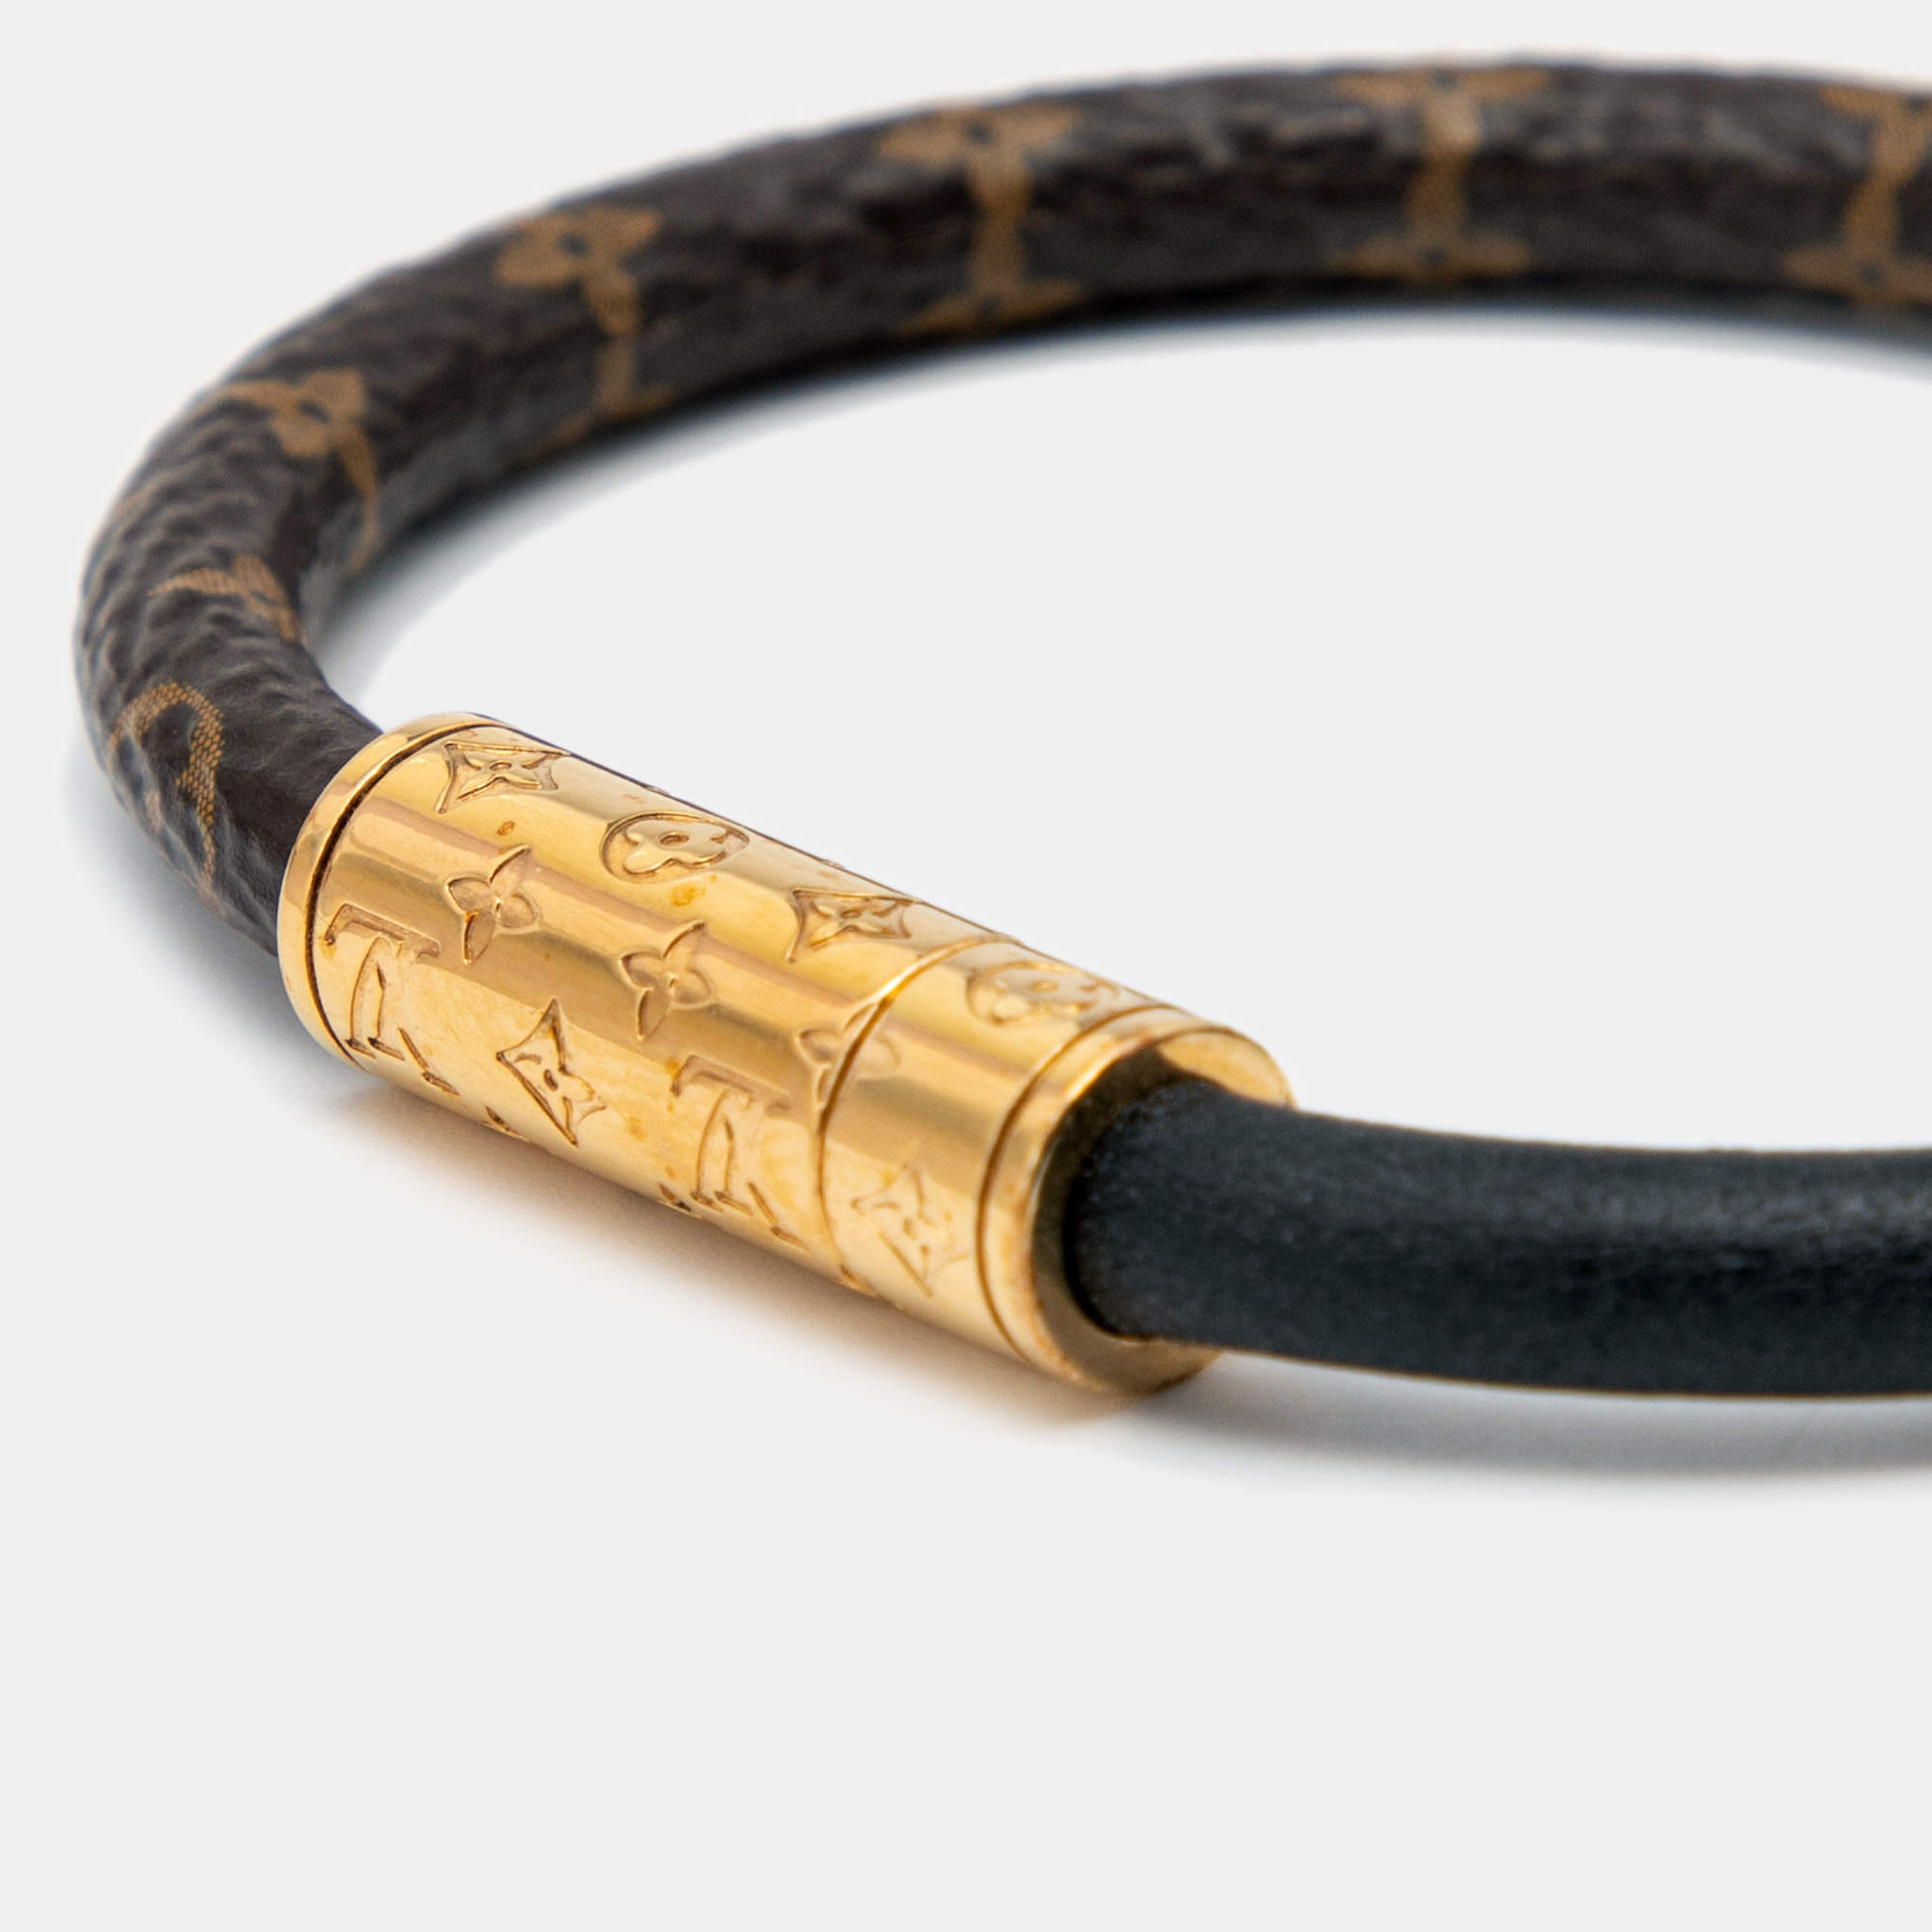 Sold at Auction: LOUIS VUITTON bracelet DAILY CONFIDENTIAL, coll